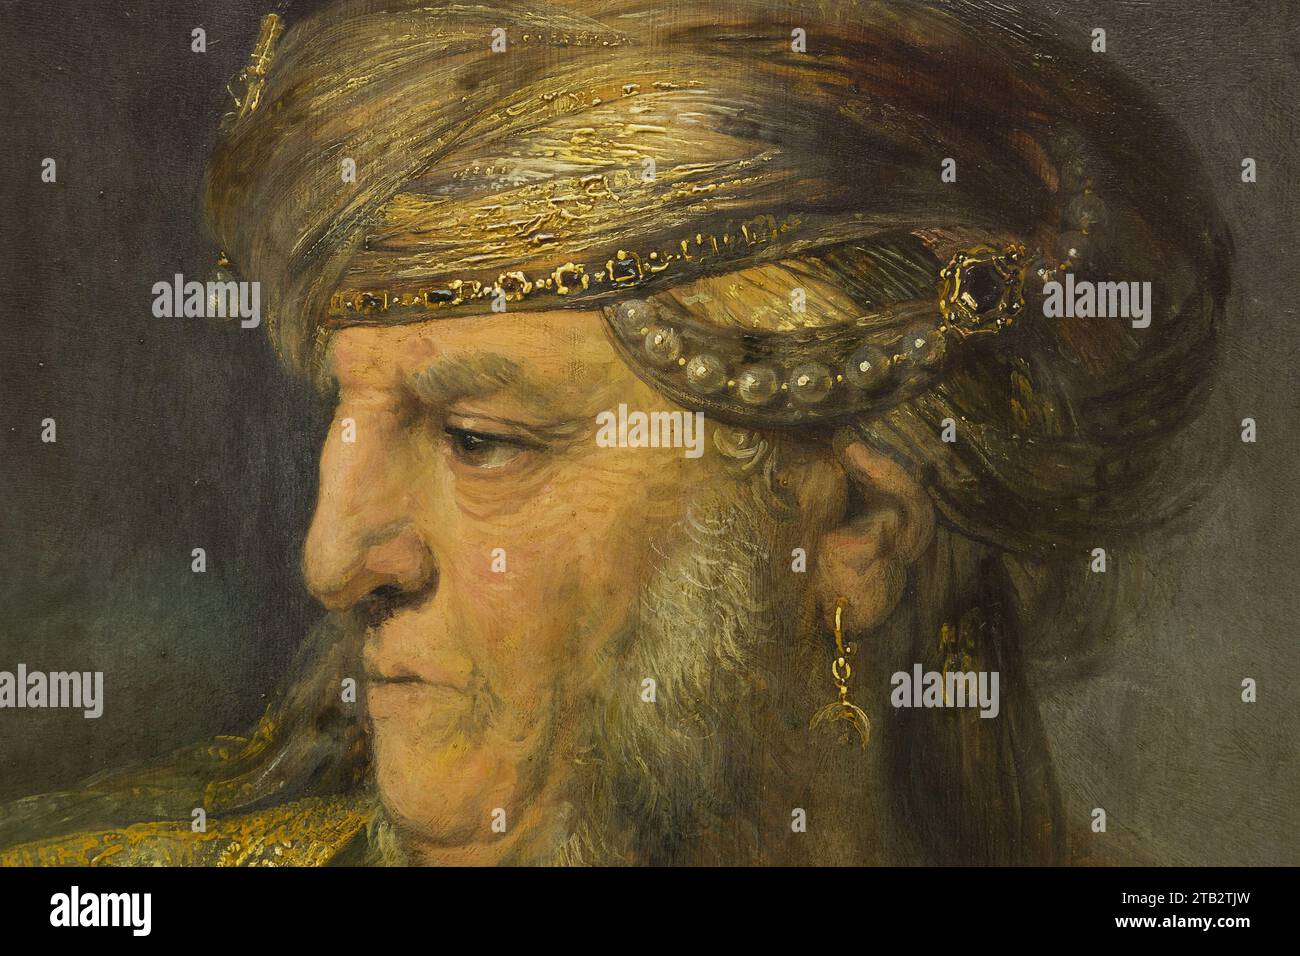 Detalle de la pintura de Rembrandt Foto de stock